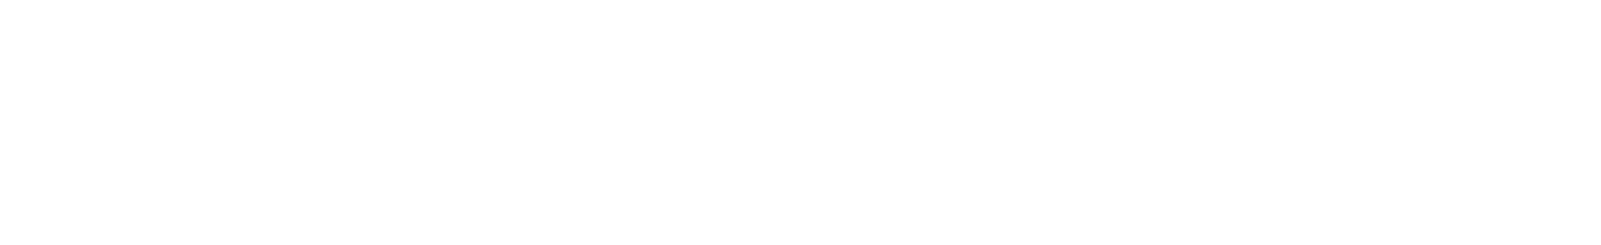 Panasonic logo large for dark backgrounds (transparent PNG)